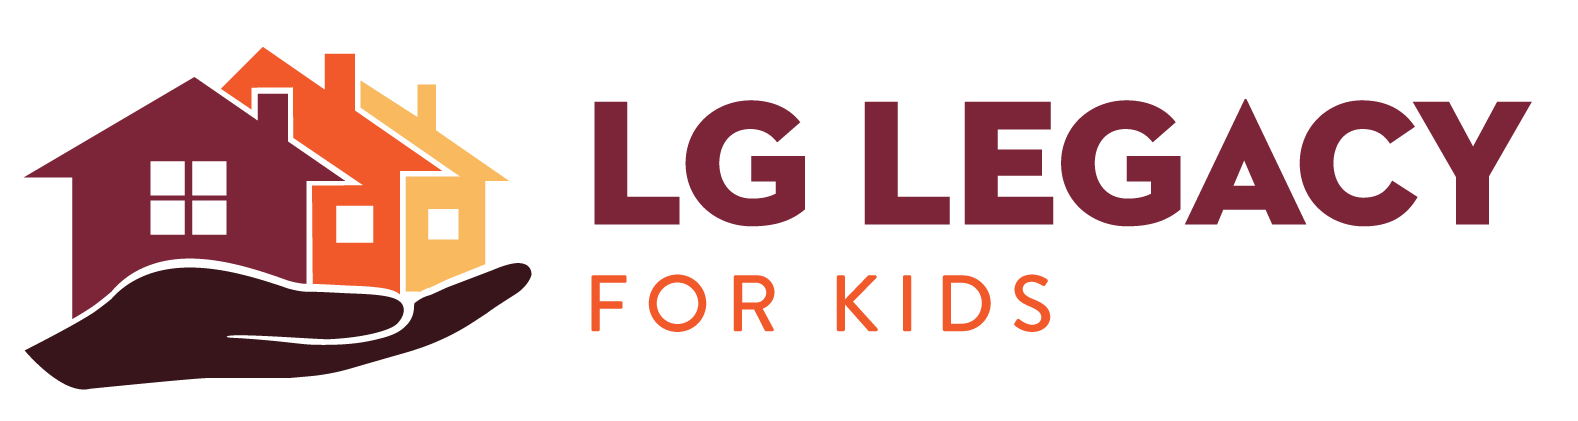 LG Legacy for Kids